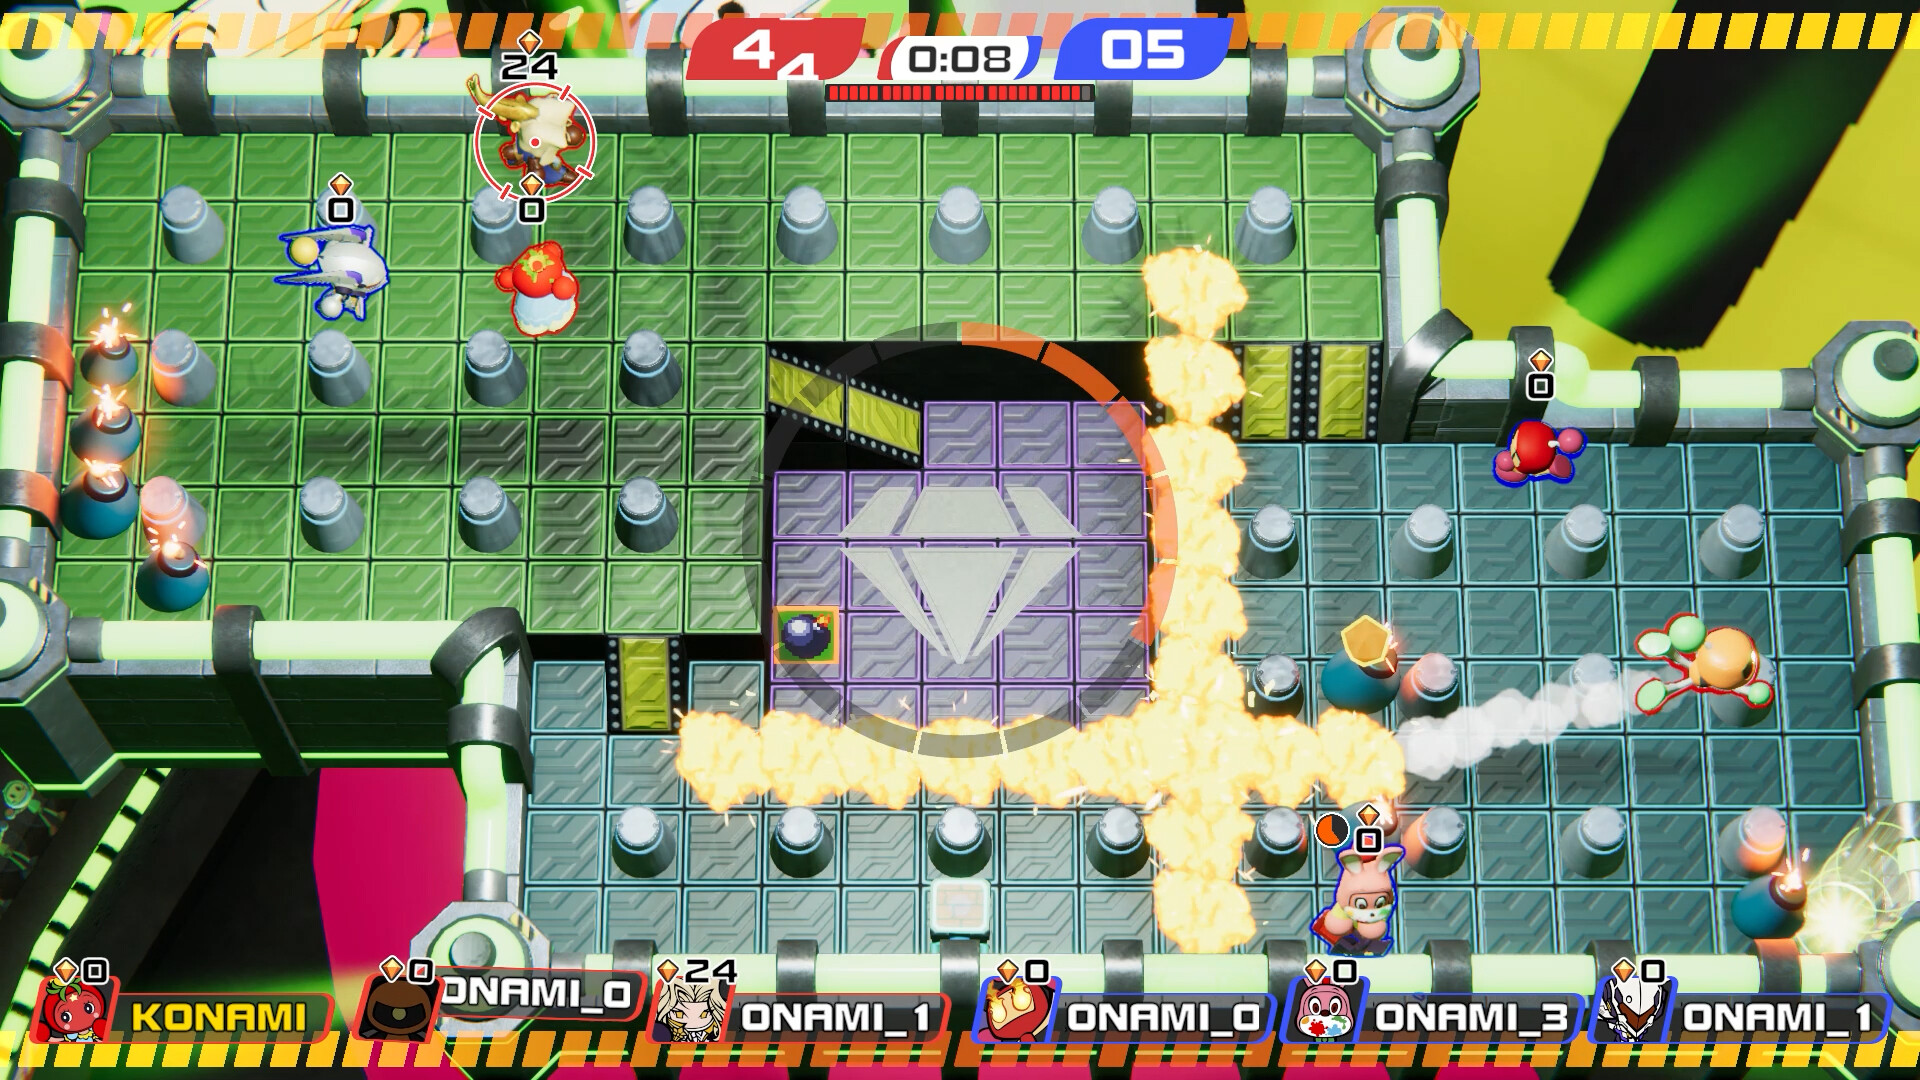 A screenshot from Super Bomberman R2